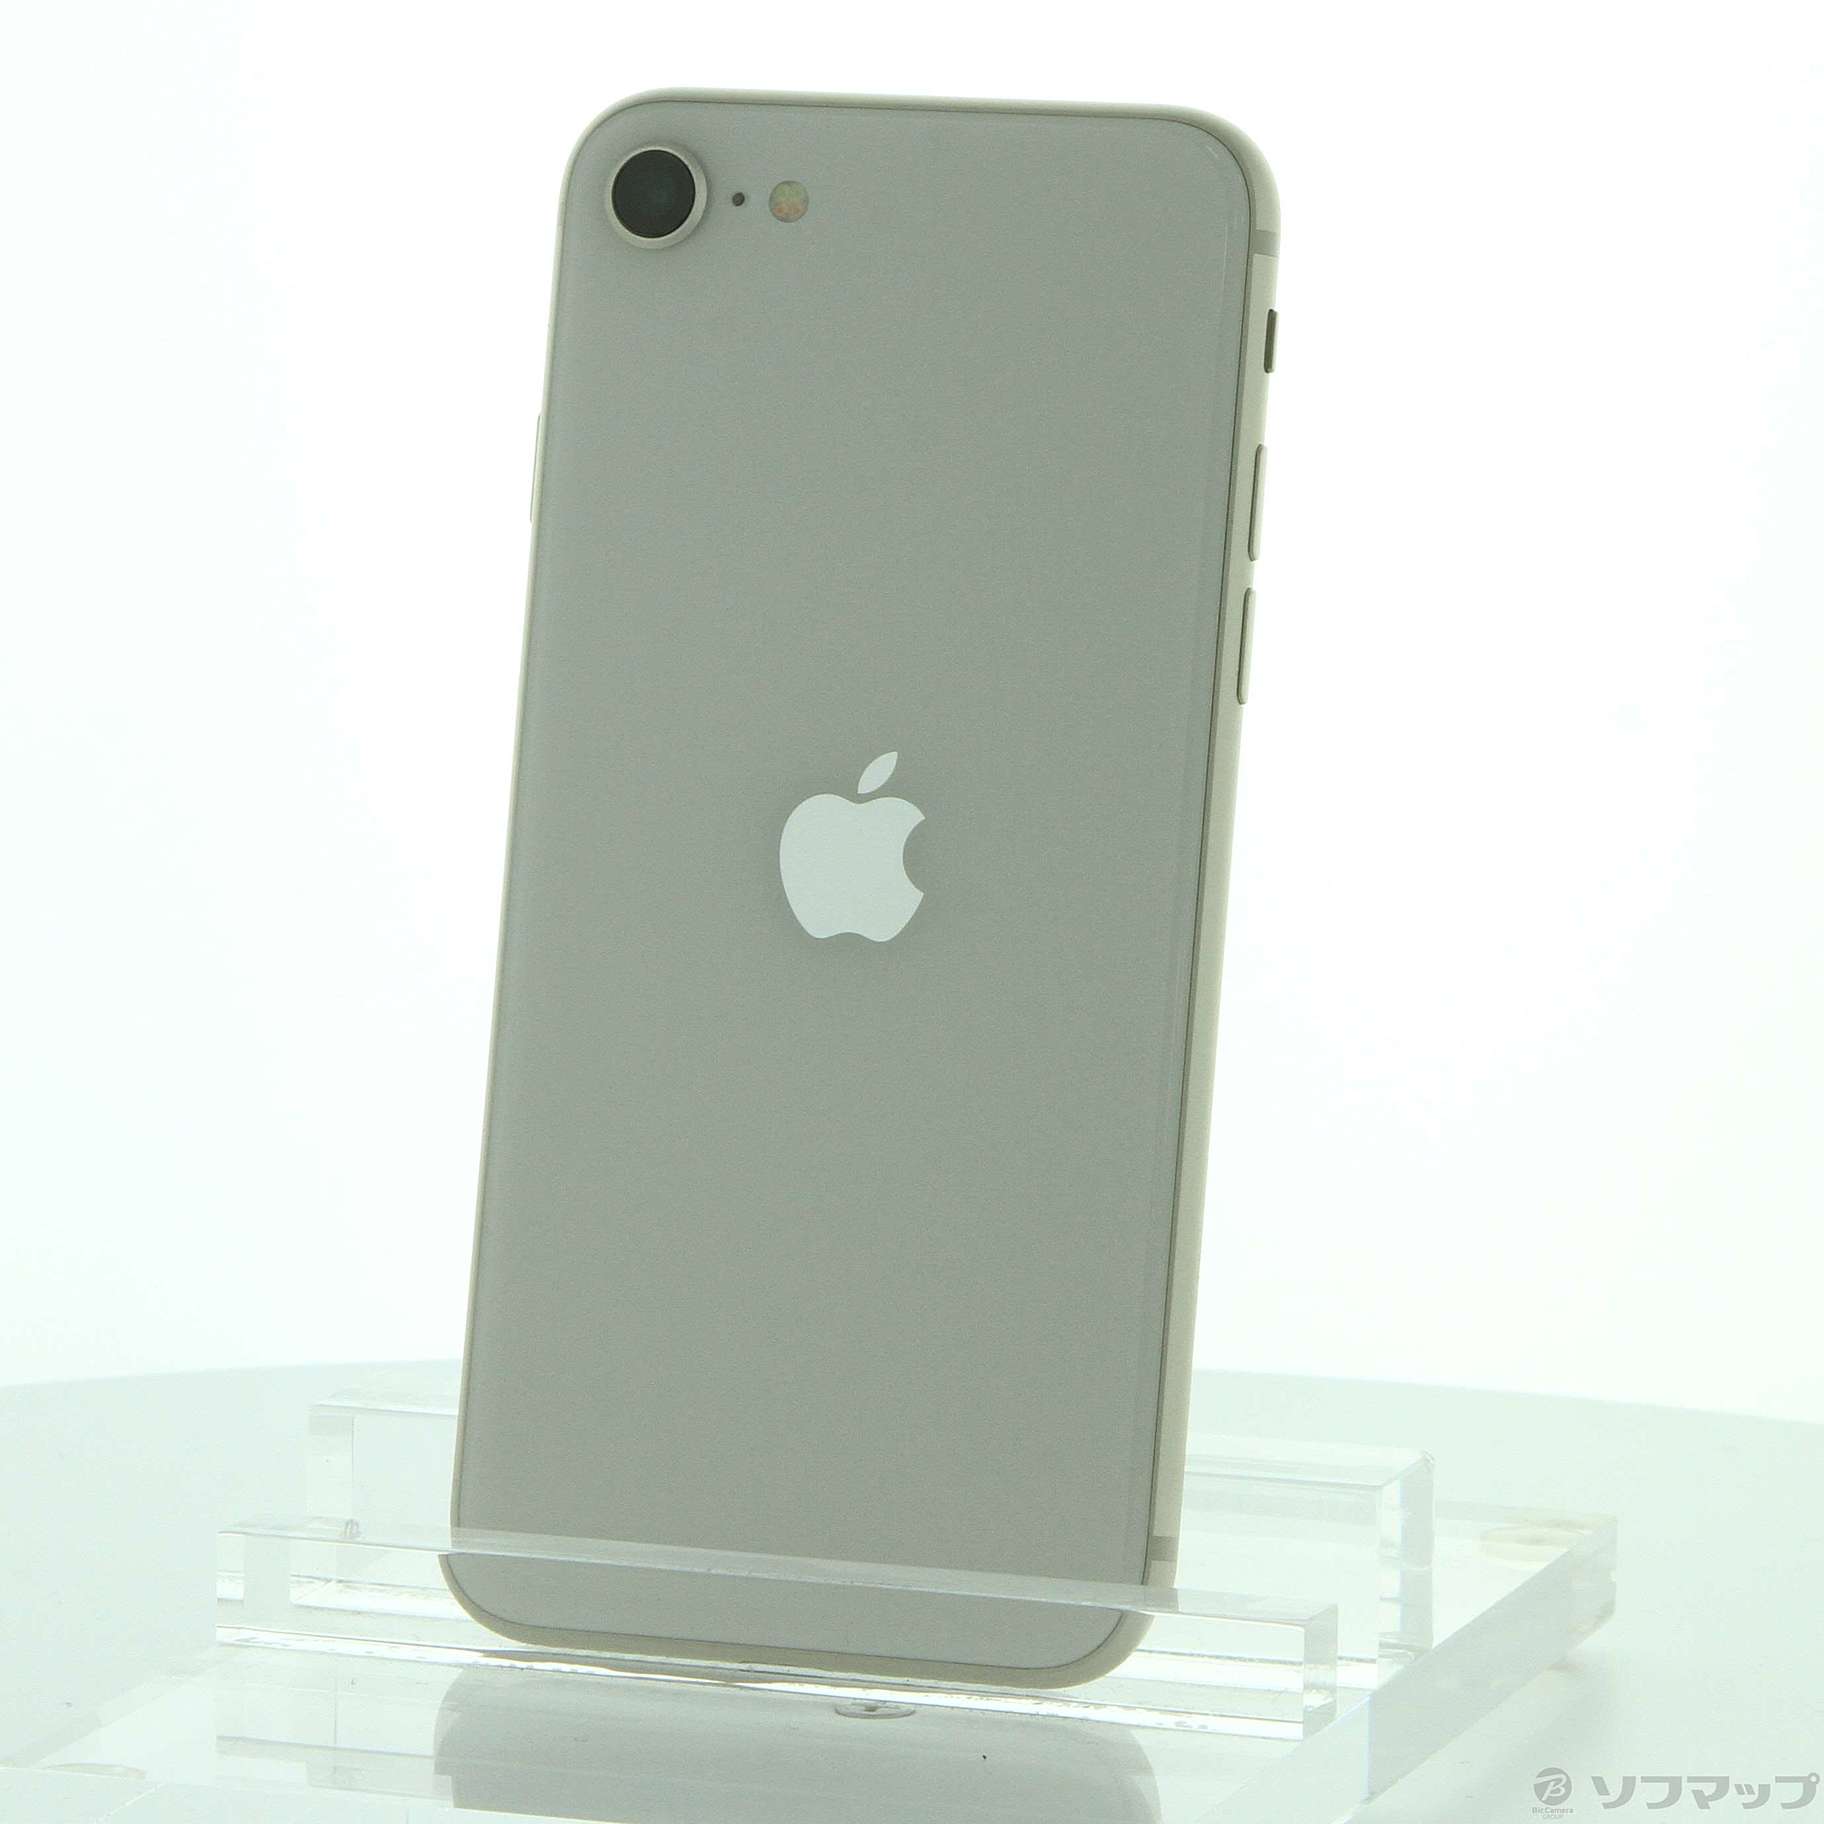 iPhone SE 第3世代 スターライト - スマートフォン本体